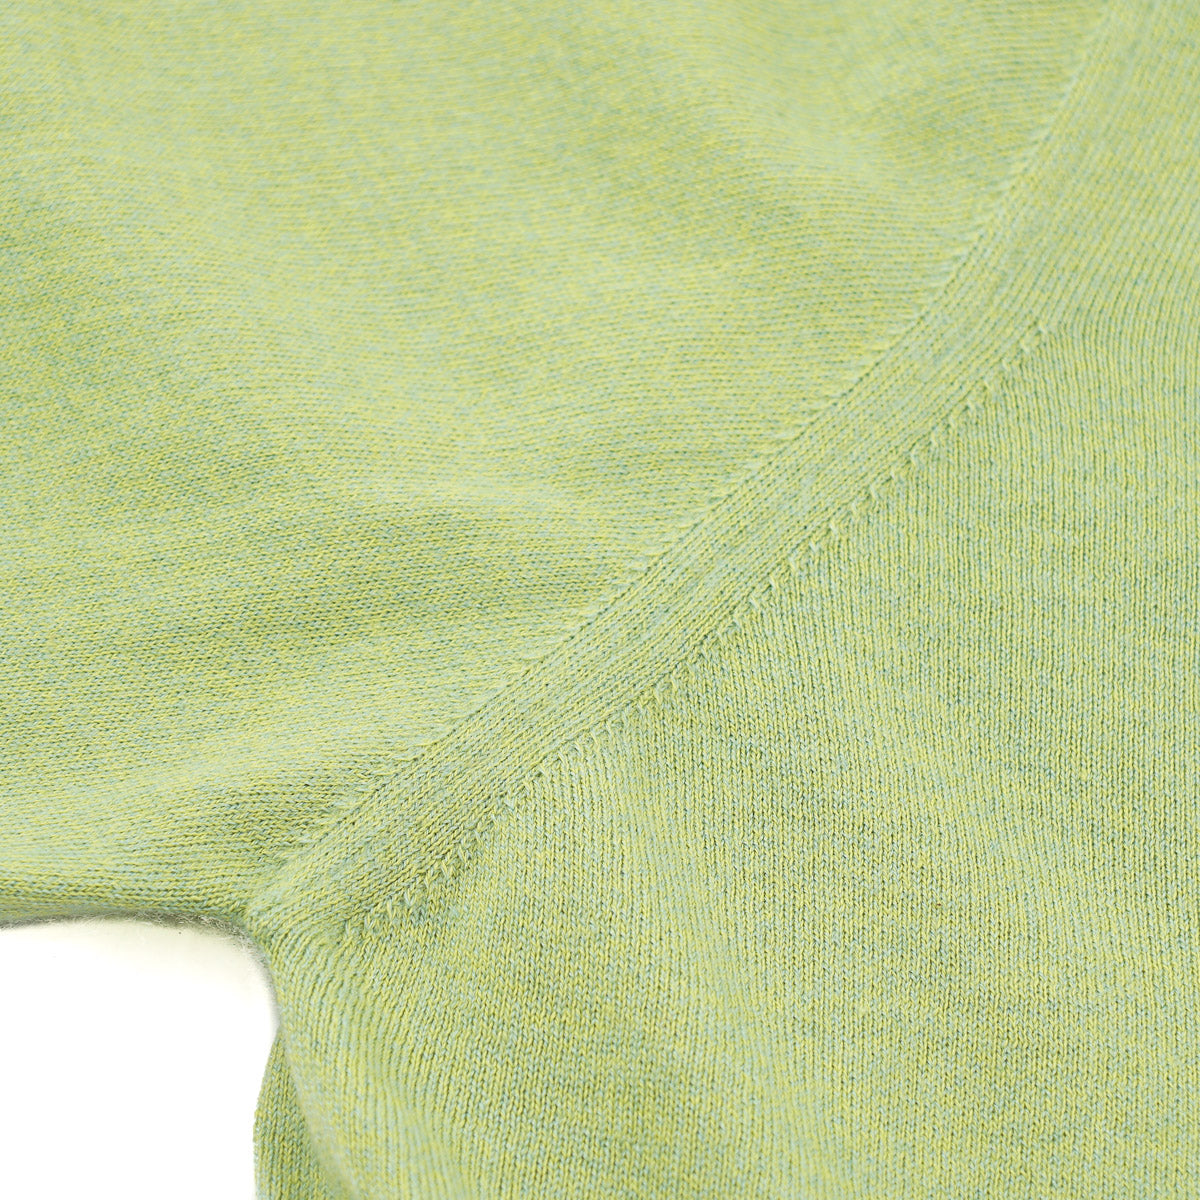 Cruciani Lightweight Cashmere-Silk Sweater - Top Shelf Apparel